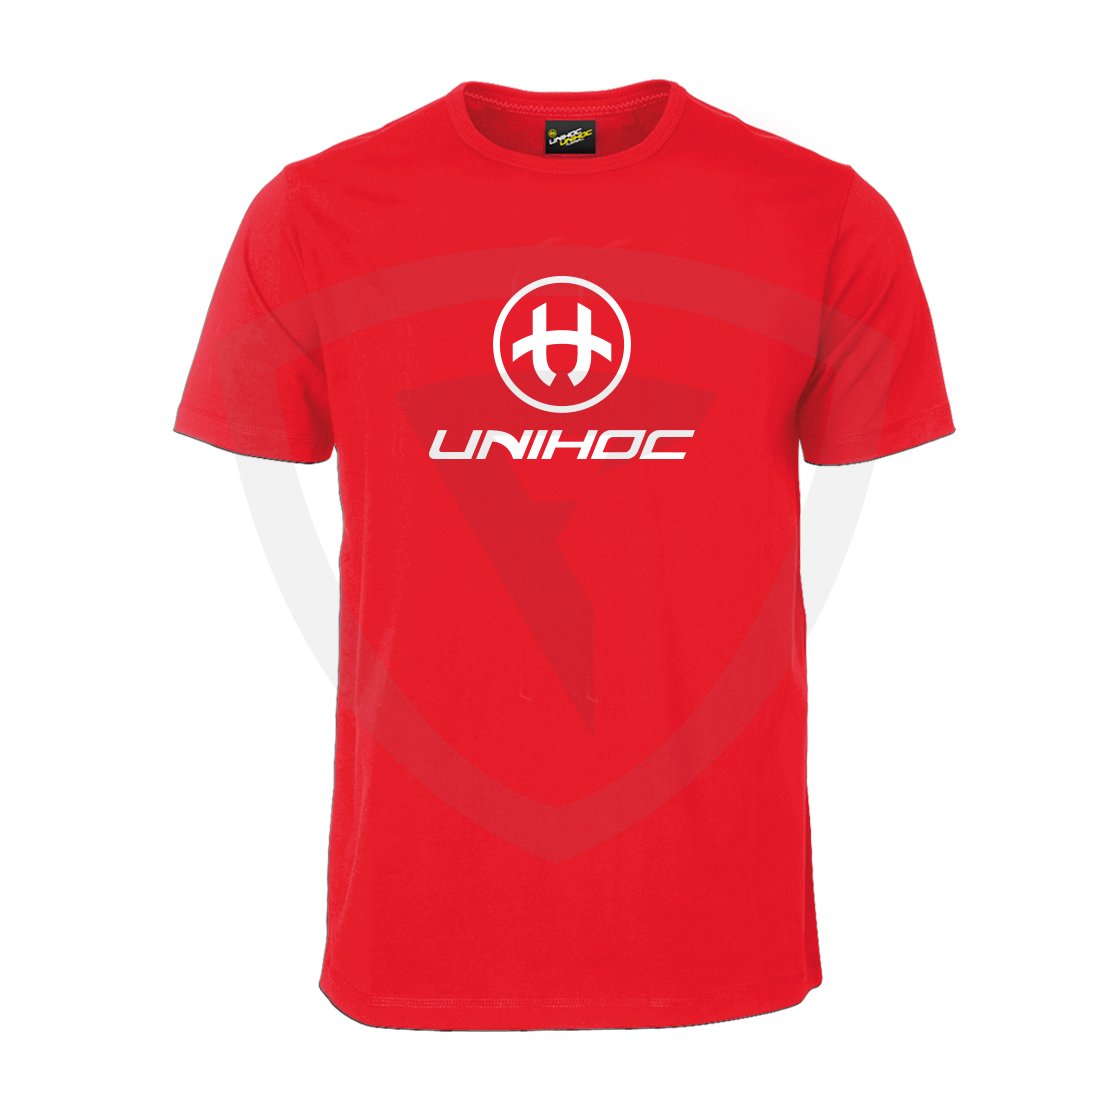 Unihoc T-shirt Storm Red SR. XL červená